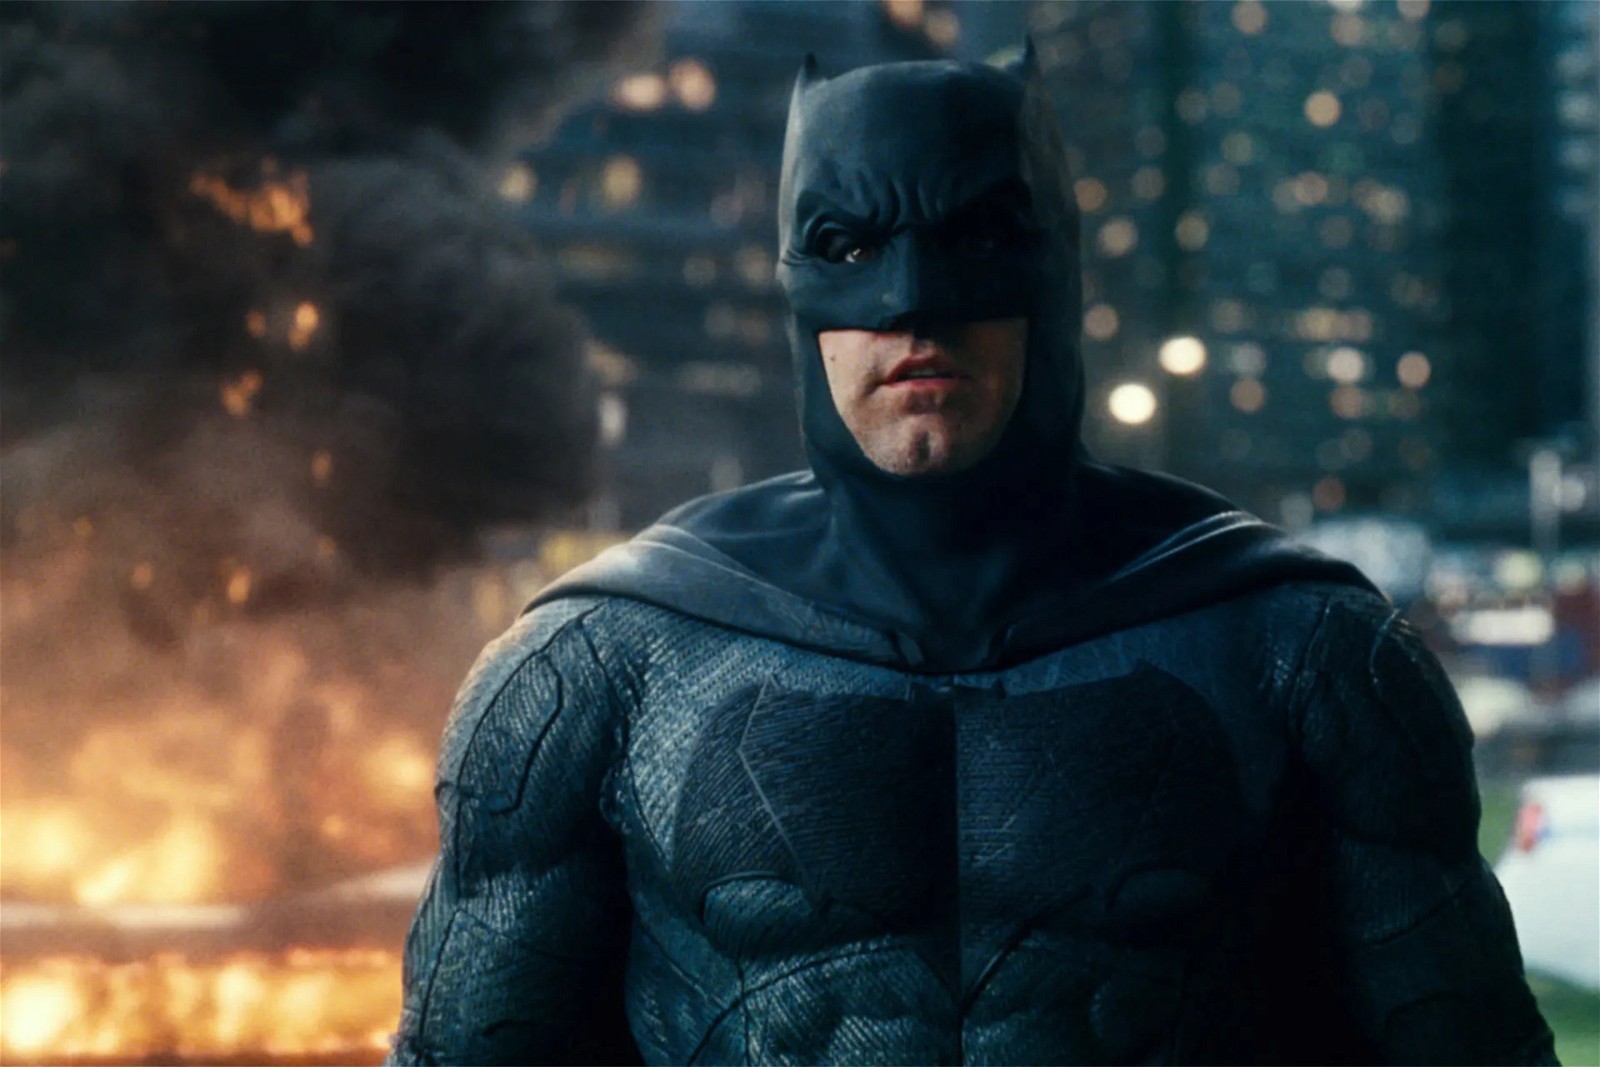 Ben Affleck as the Batman